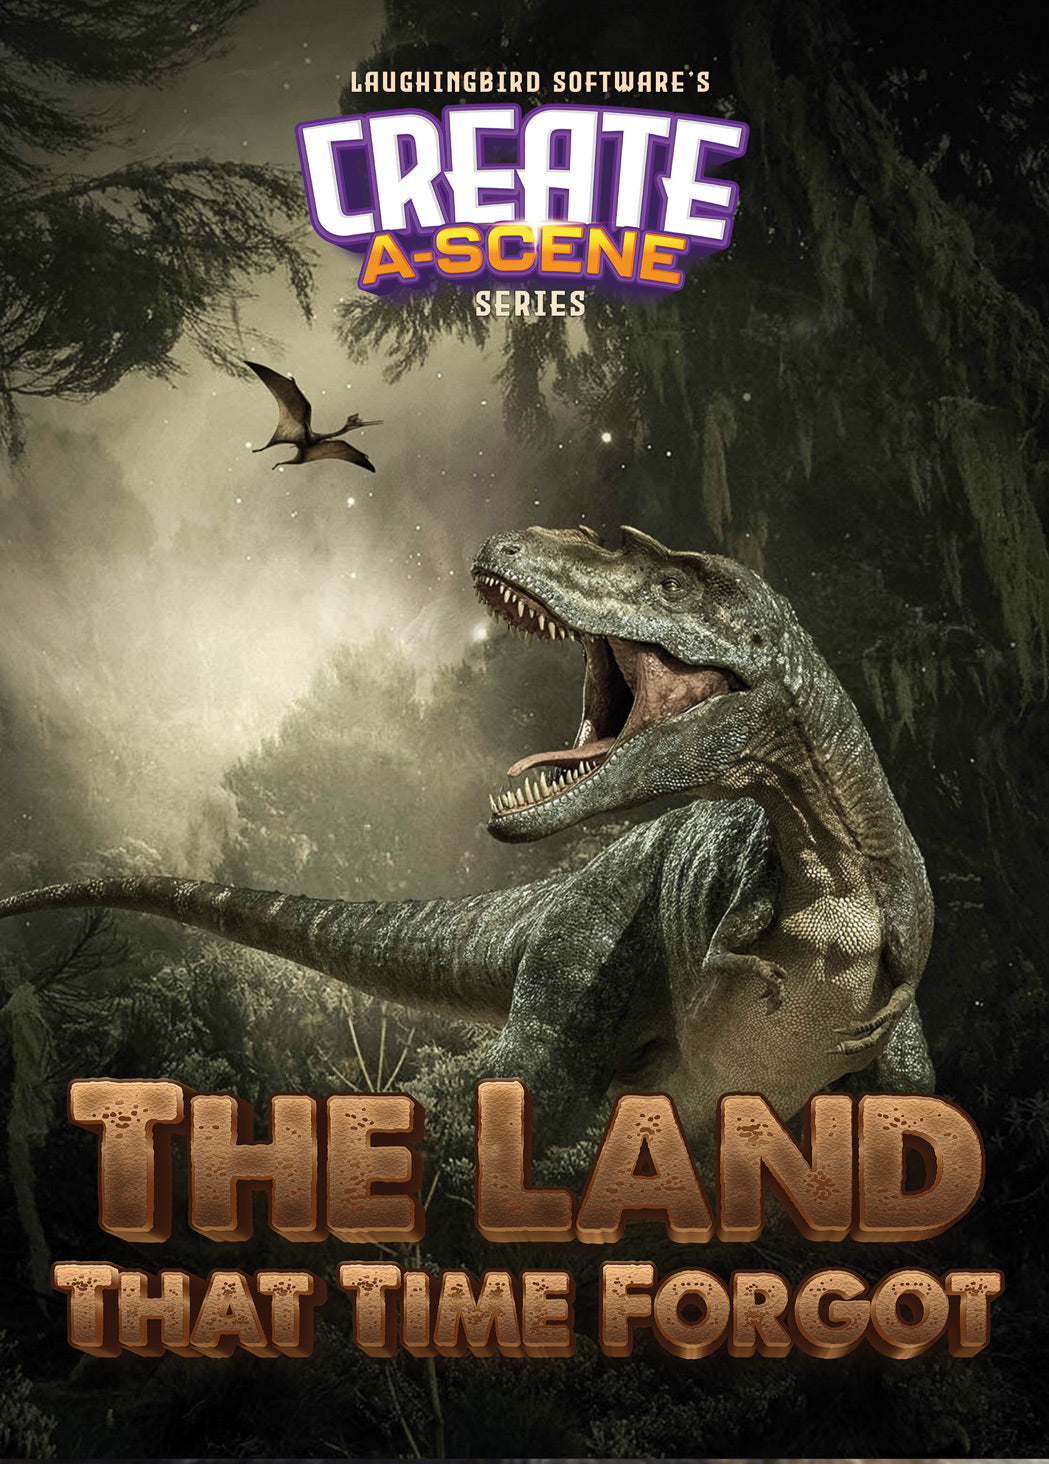 Laughingbird Create A Scene: Prehistoric Dinosaurs